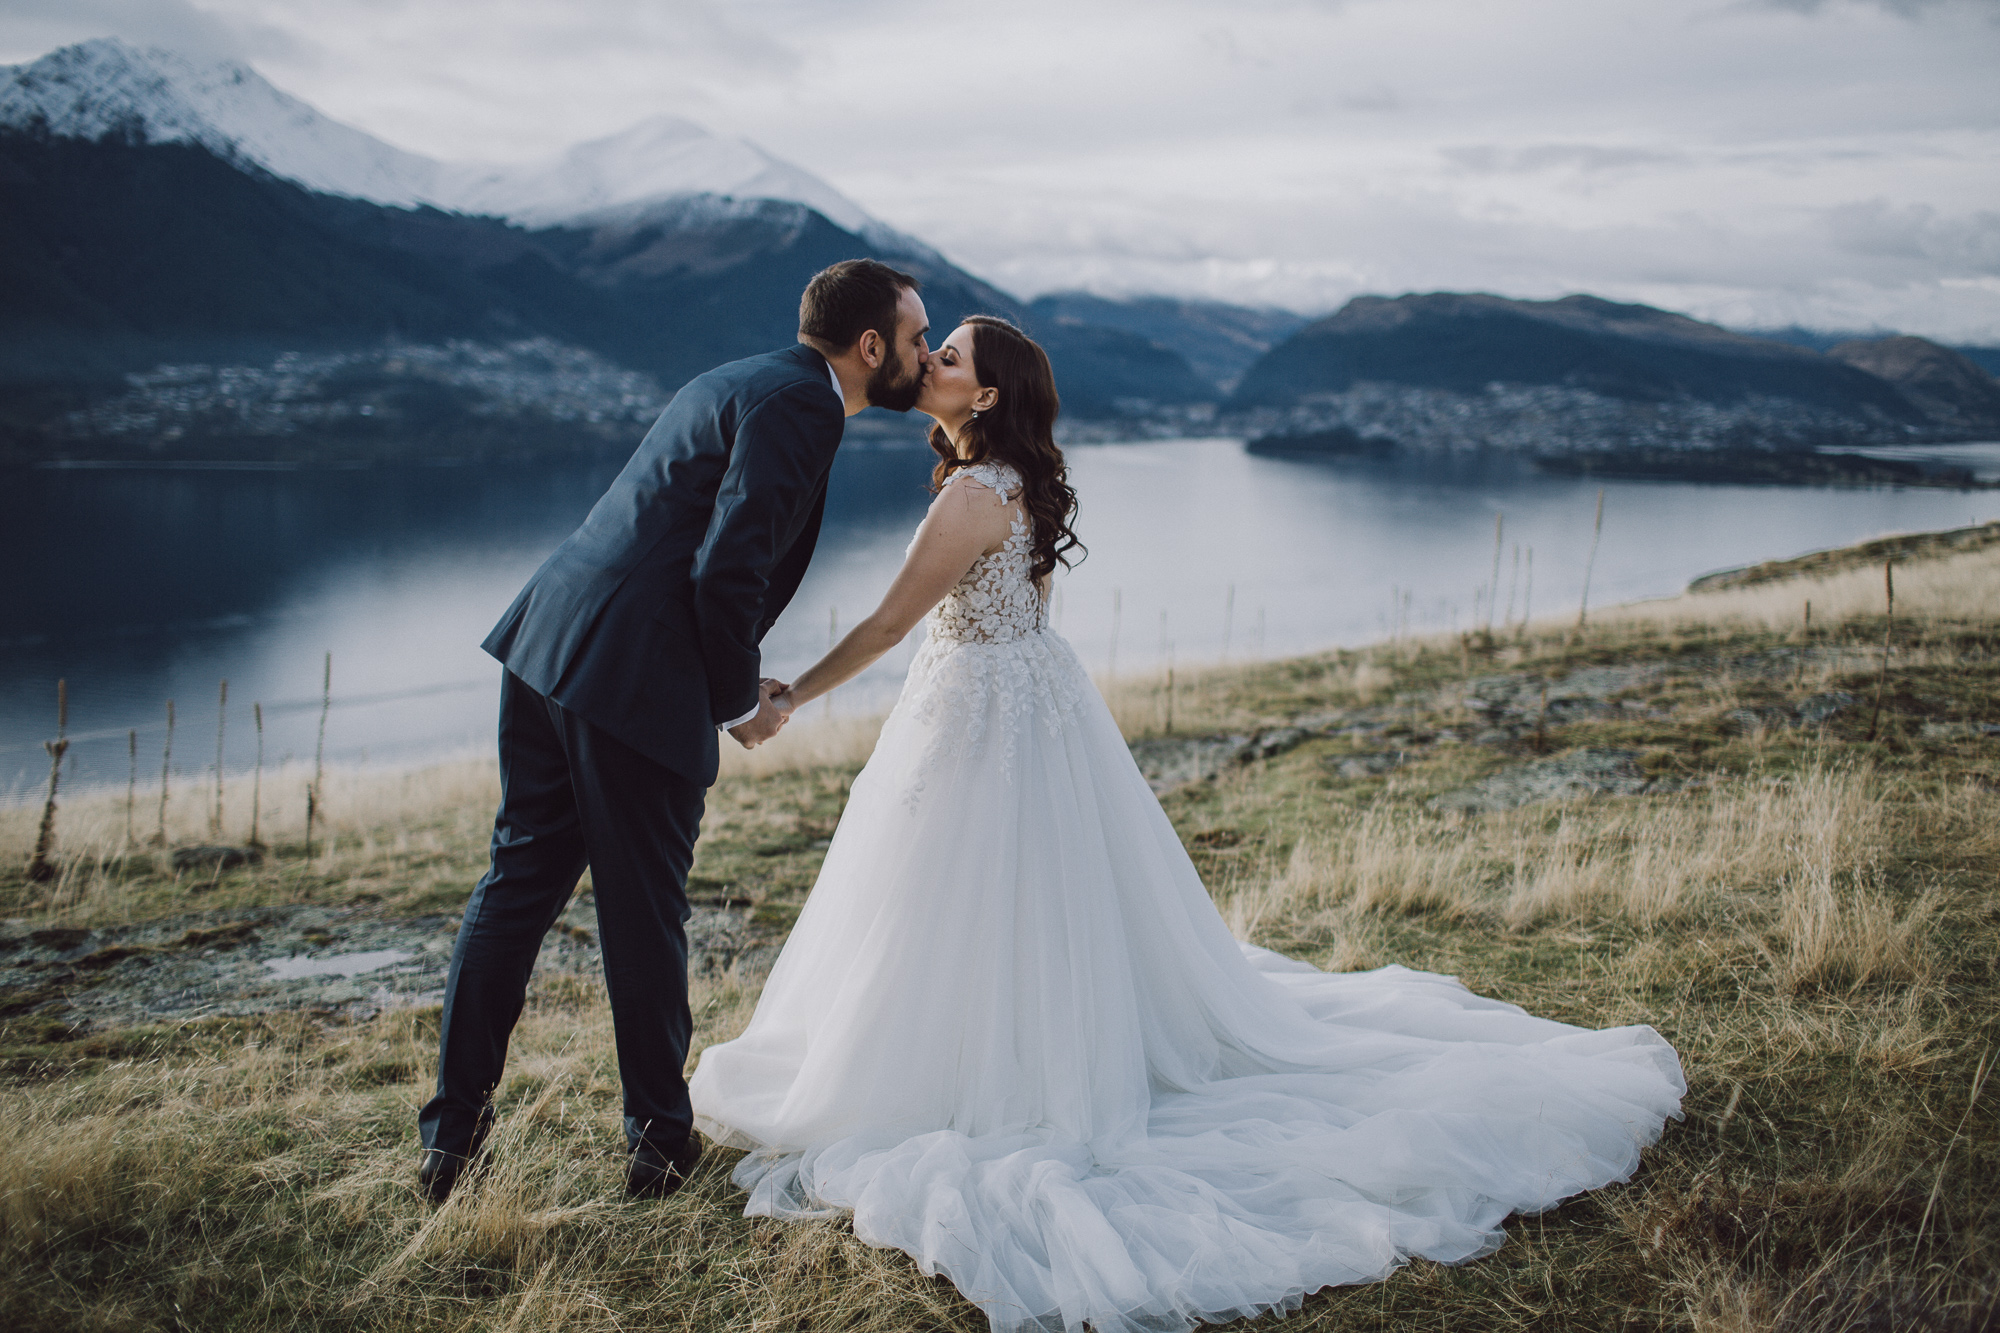 Cecil Peak mountain top photos for destination wedding